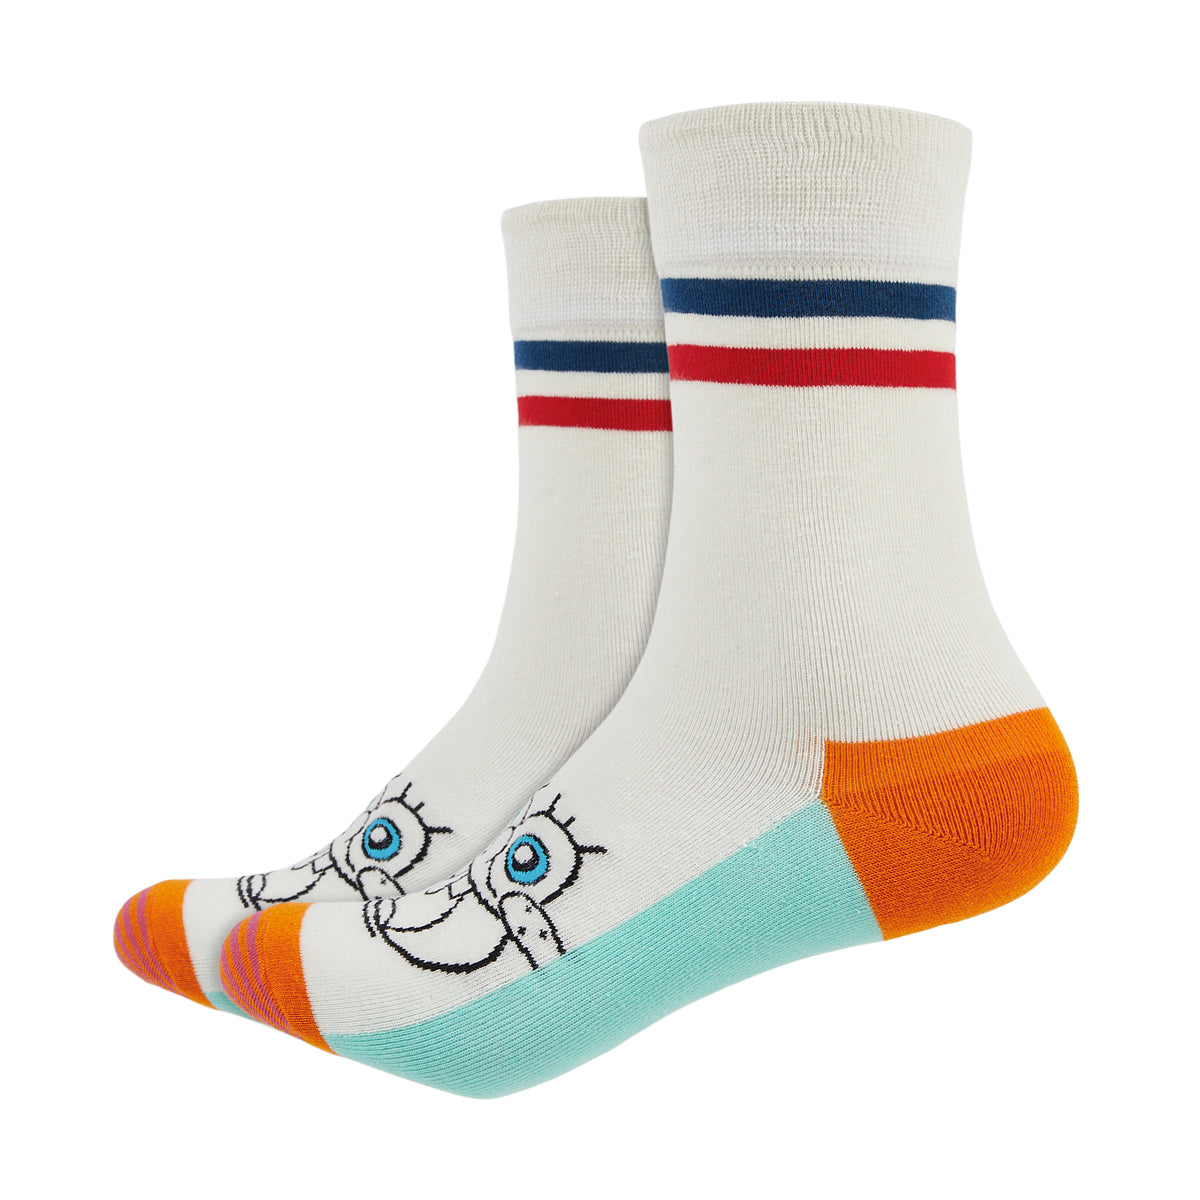 Spongebob Printed Crew Length Socks - IDENTITY Apparel Shop